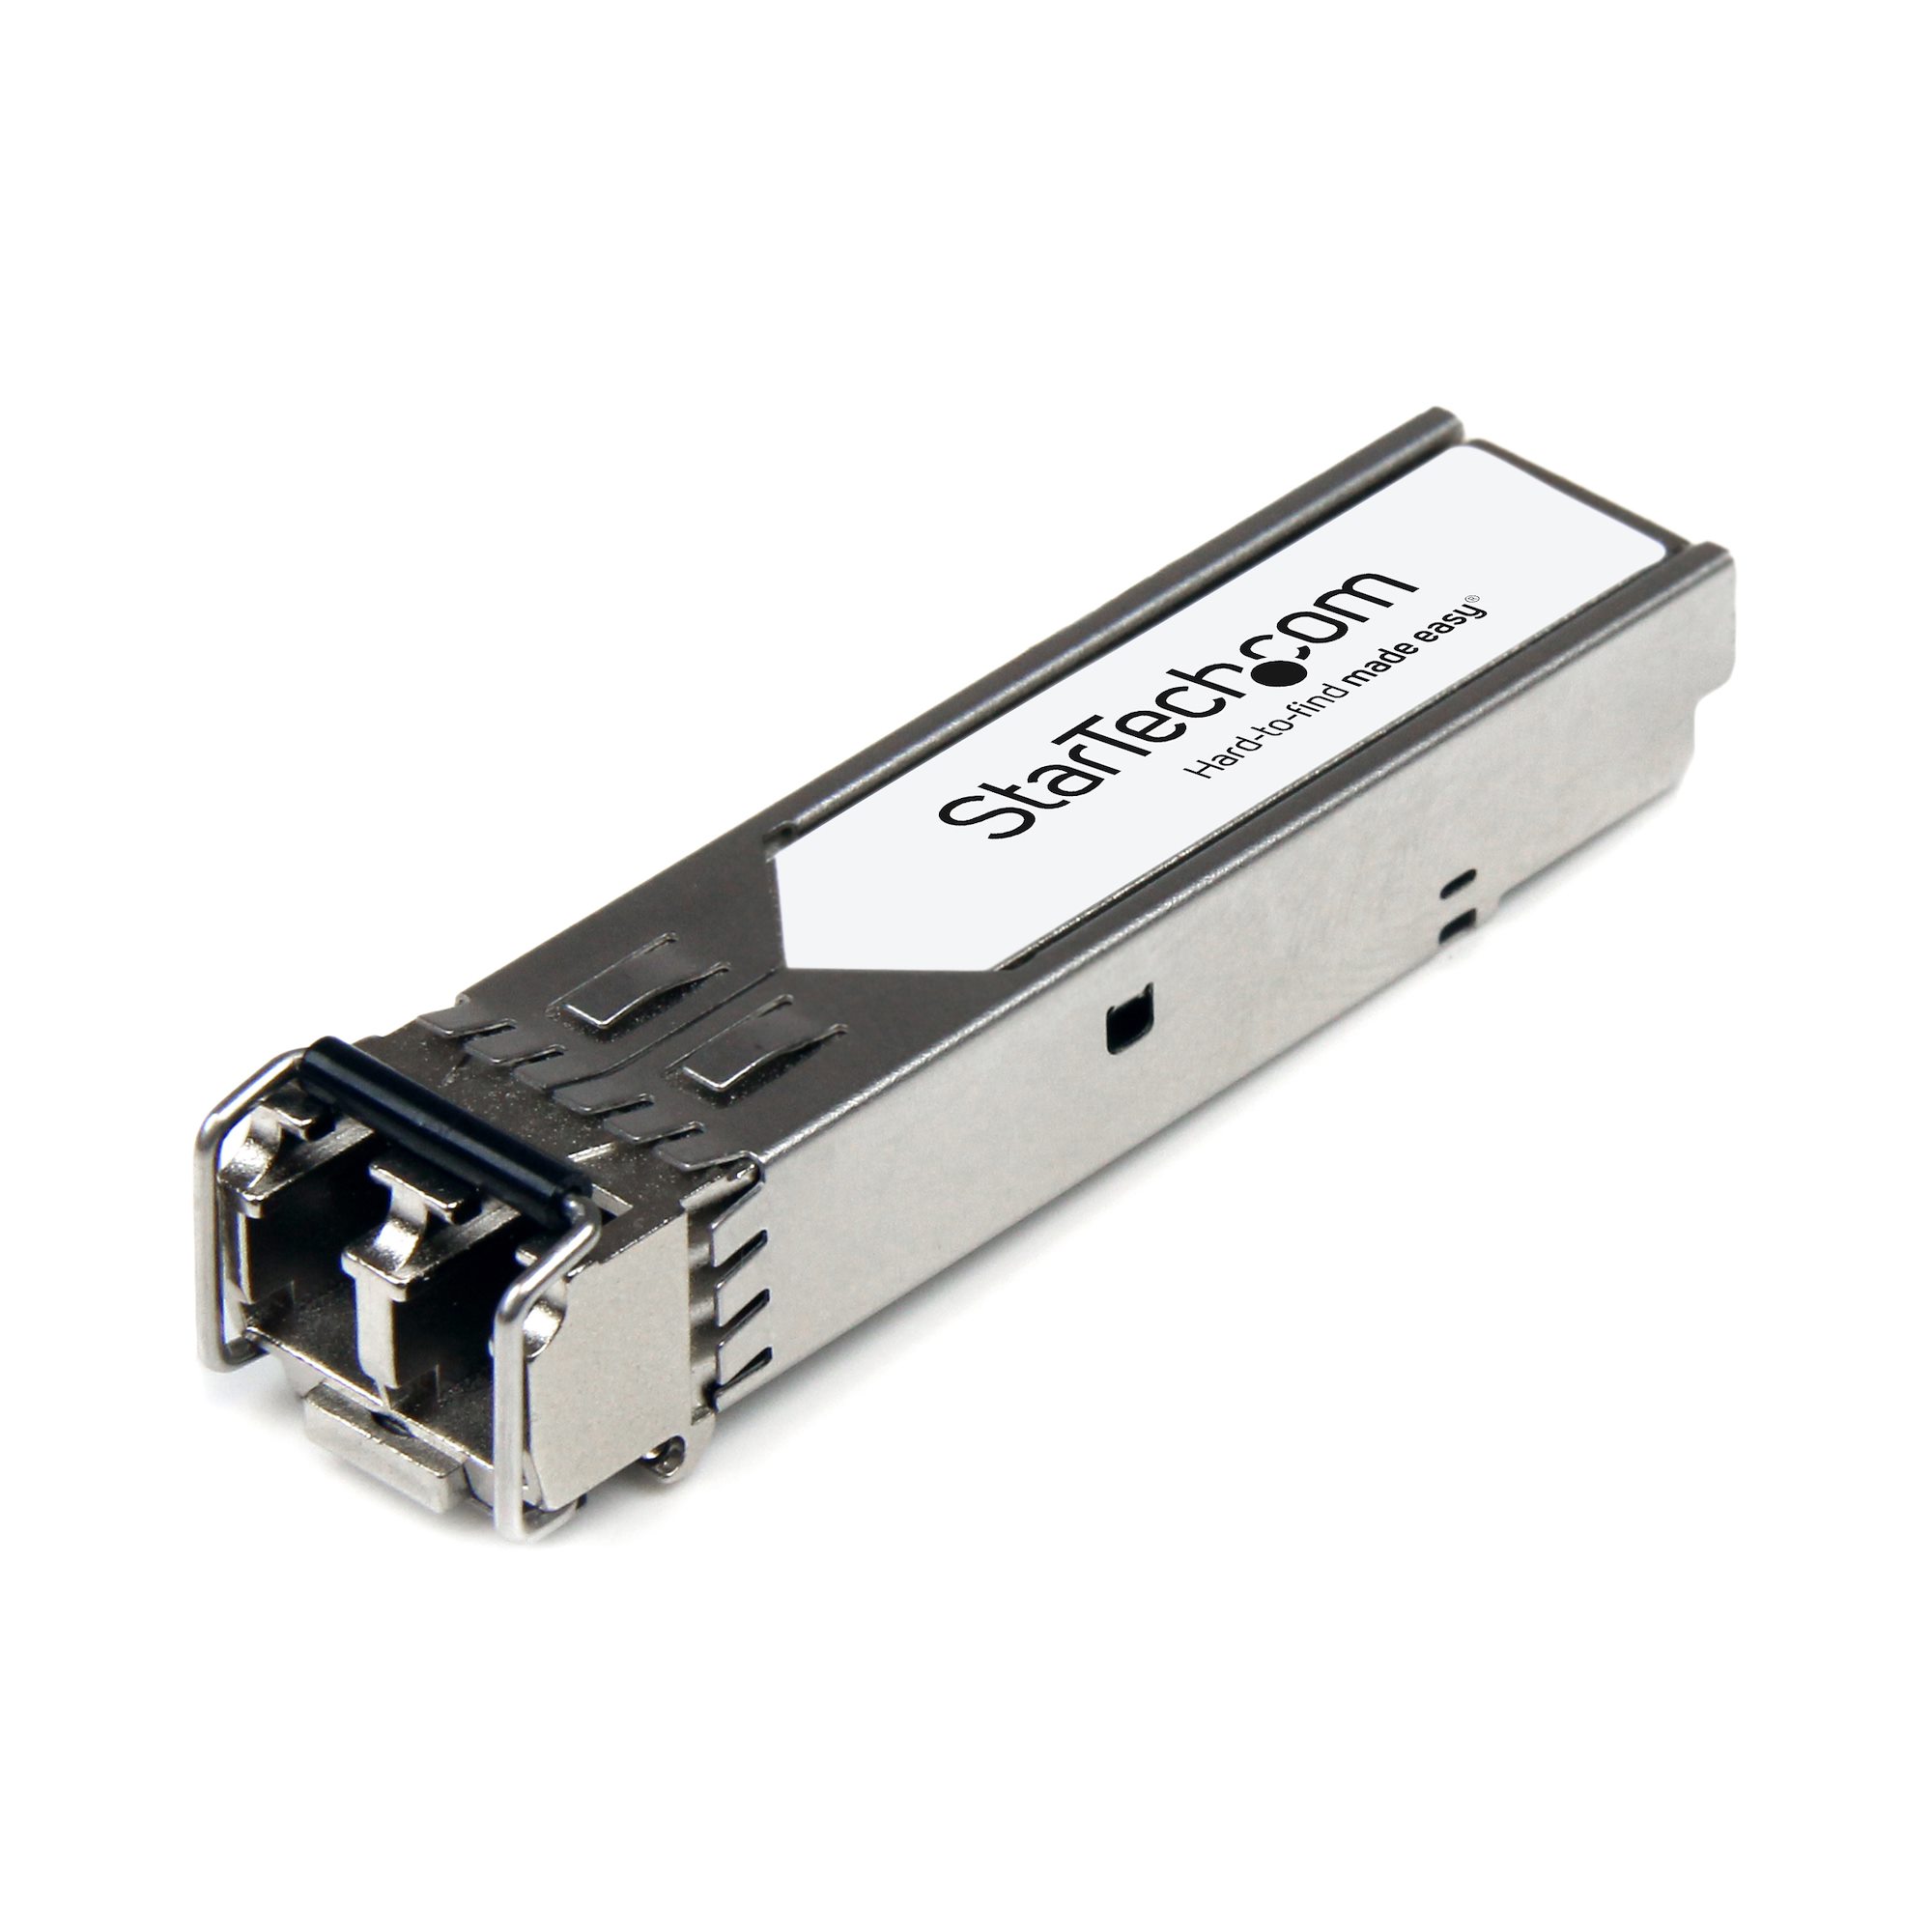 StarTech.com 10GBASE-LR SFP+ Transceiver Module 10 Gbps MSA Compliant Fiber SFP+ 10 km 